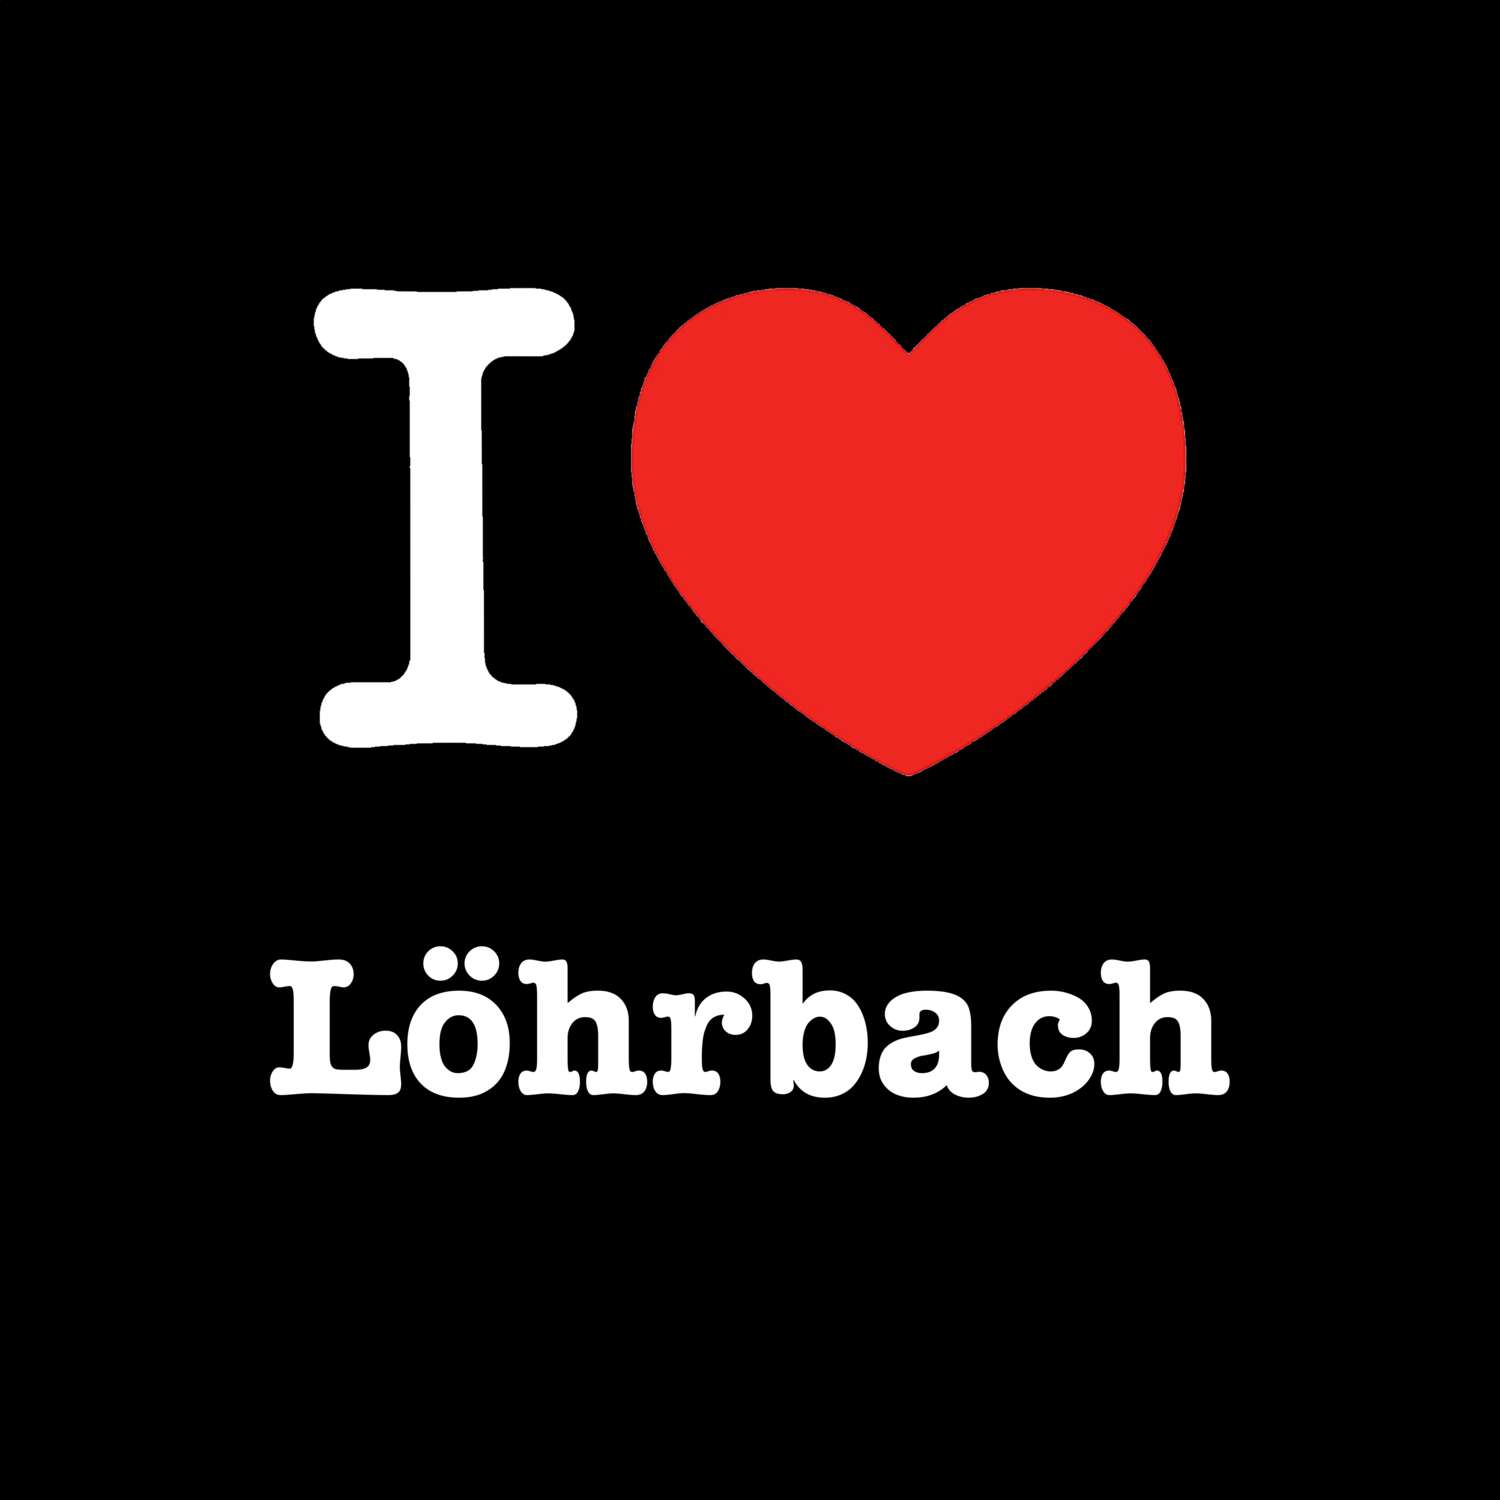 Löhrbach T-Shirt »I love«